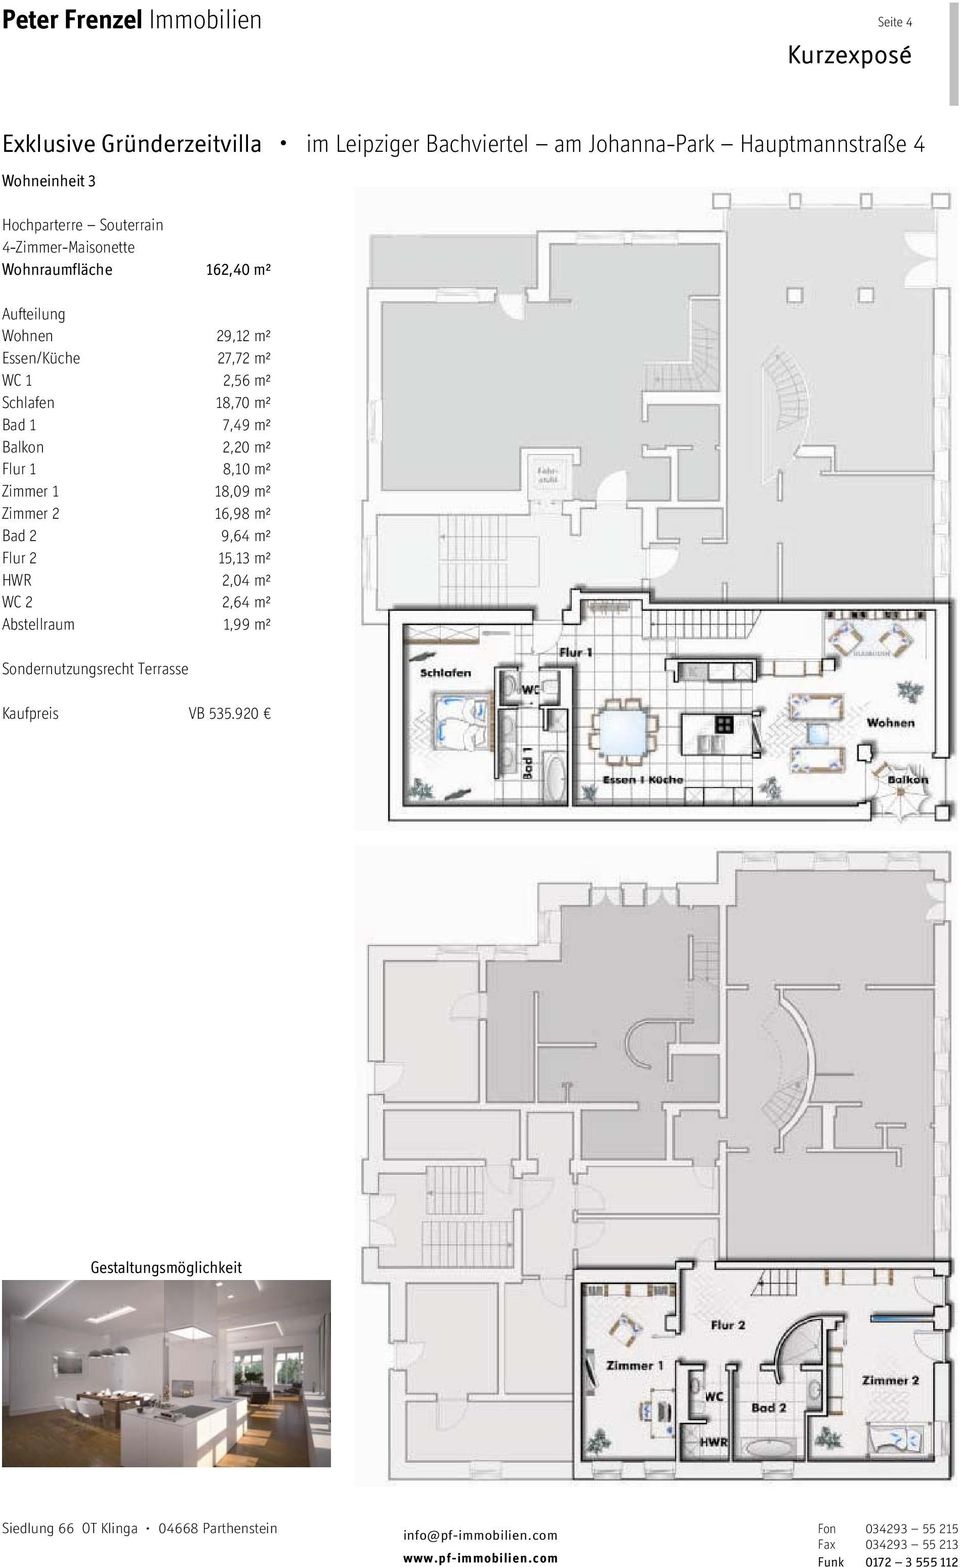 7,49 m² Balkon 2,20 m² Flur 1 8,10 m² Zimmer 1 18,09 m² Zimmer 2 16,98 m² Bad 2 9,64 m² Flur 2 15,13